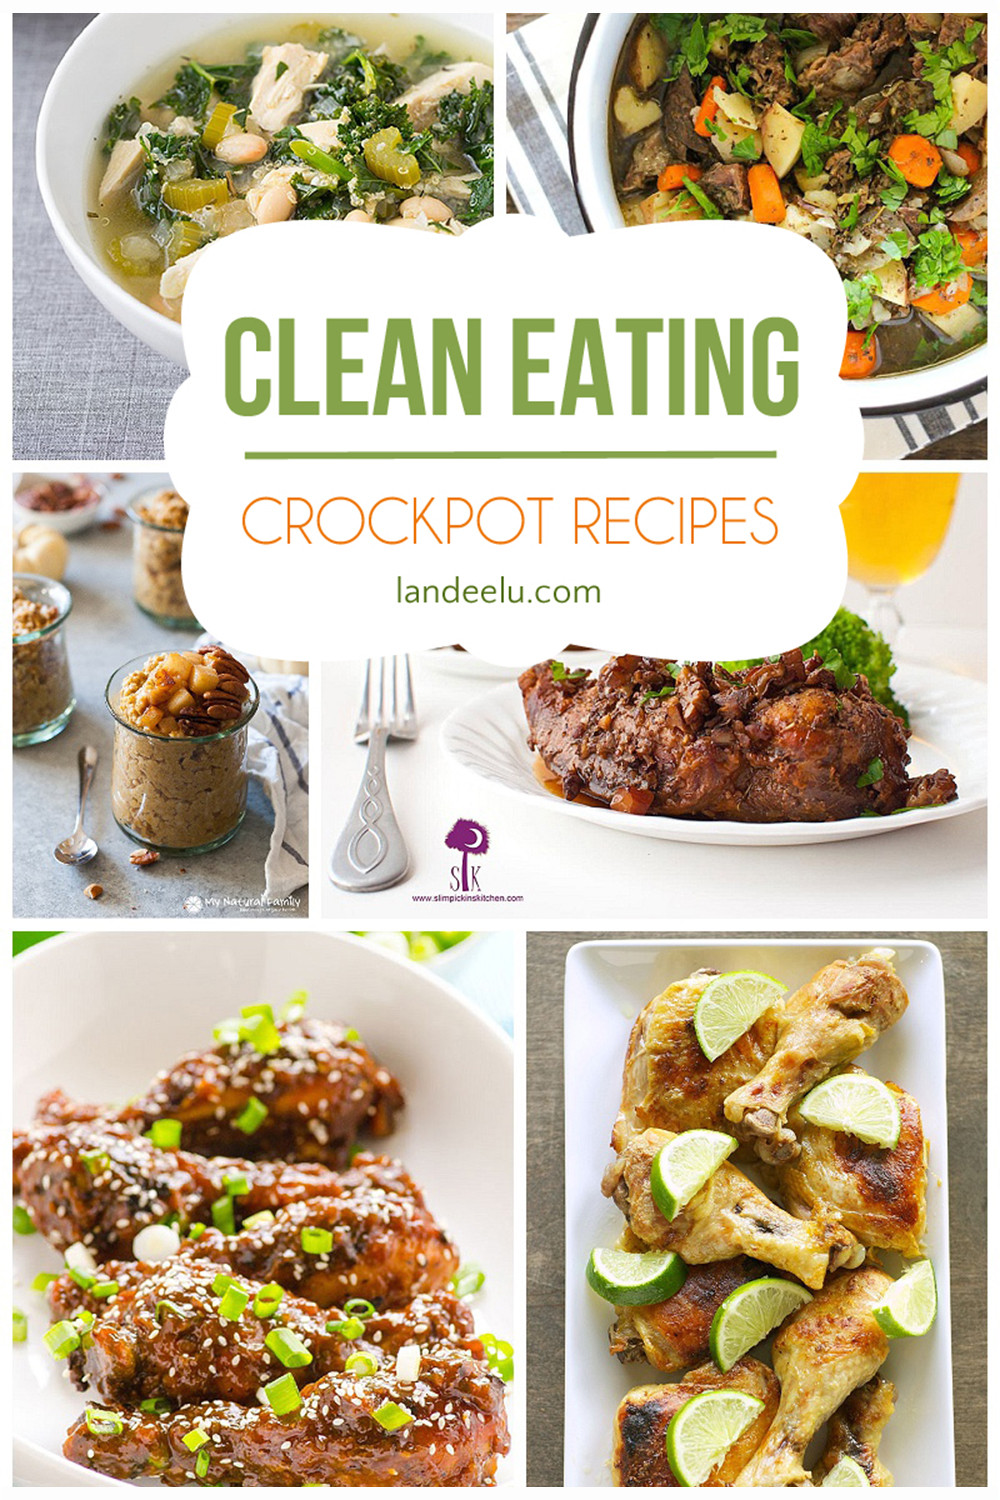 Clean Eating Crock Pot Recipes
 Delicious Clean Eating Crockpot Recipes landeelu